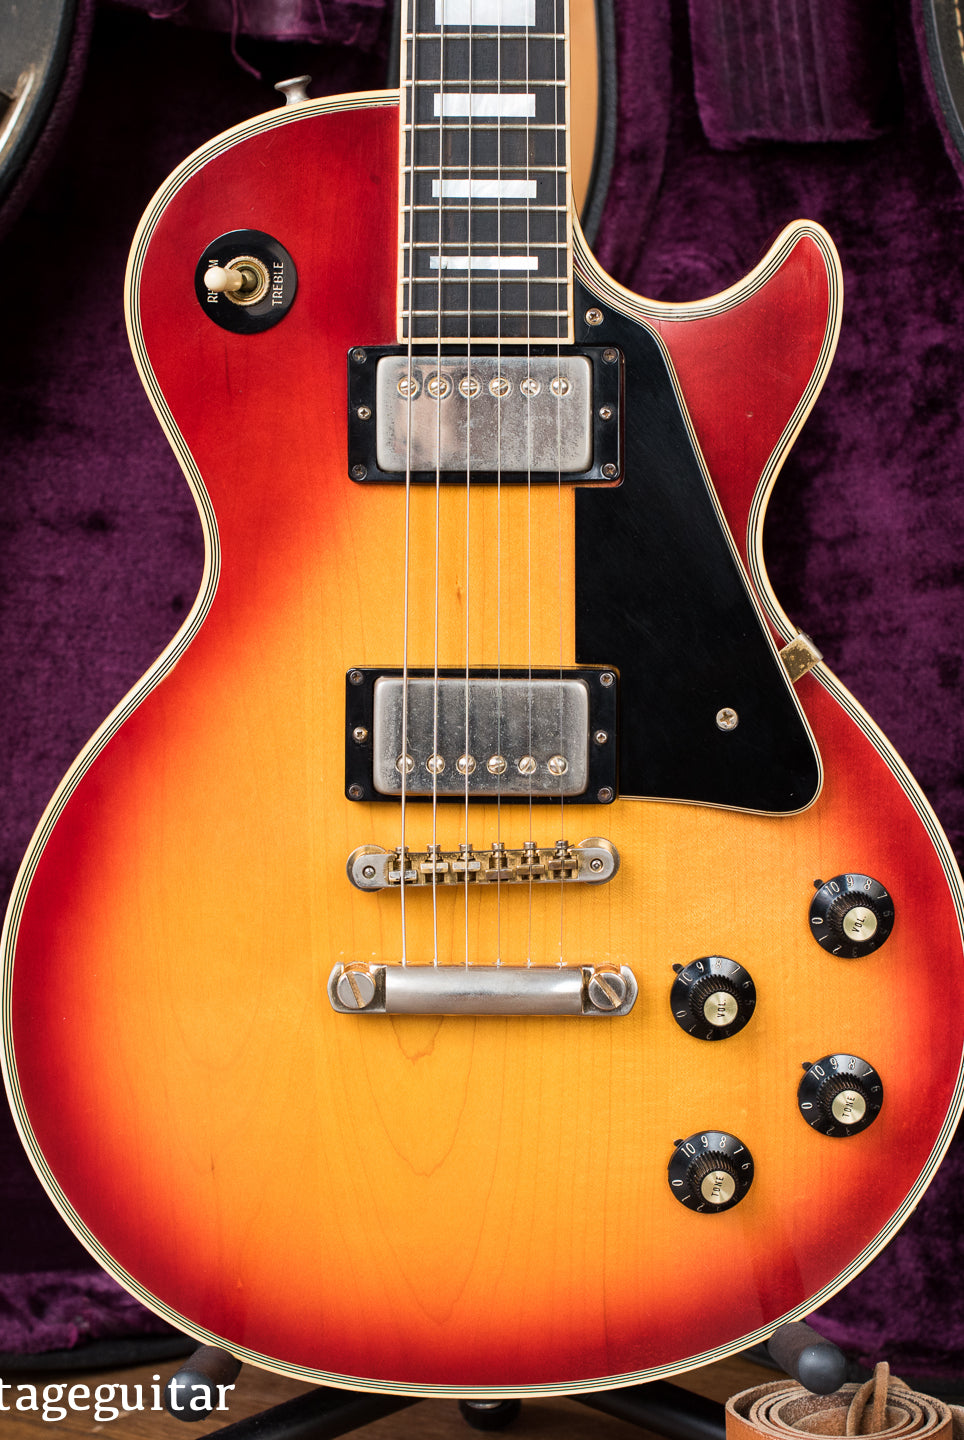 1974 Gibson Les Paul Custom guitar